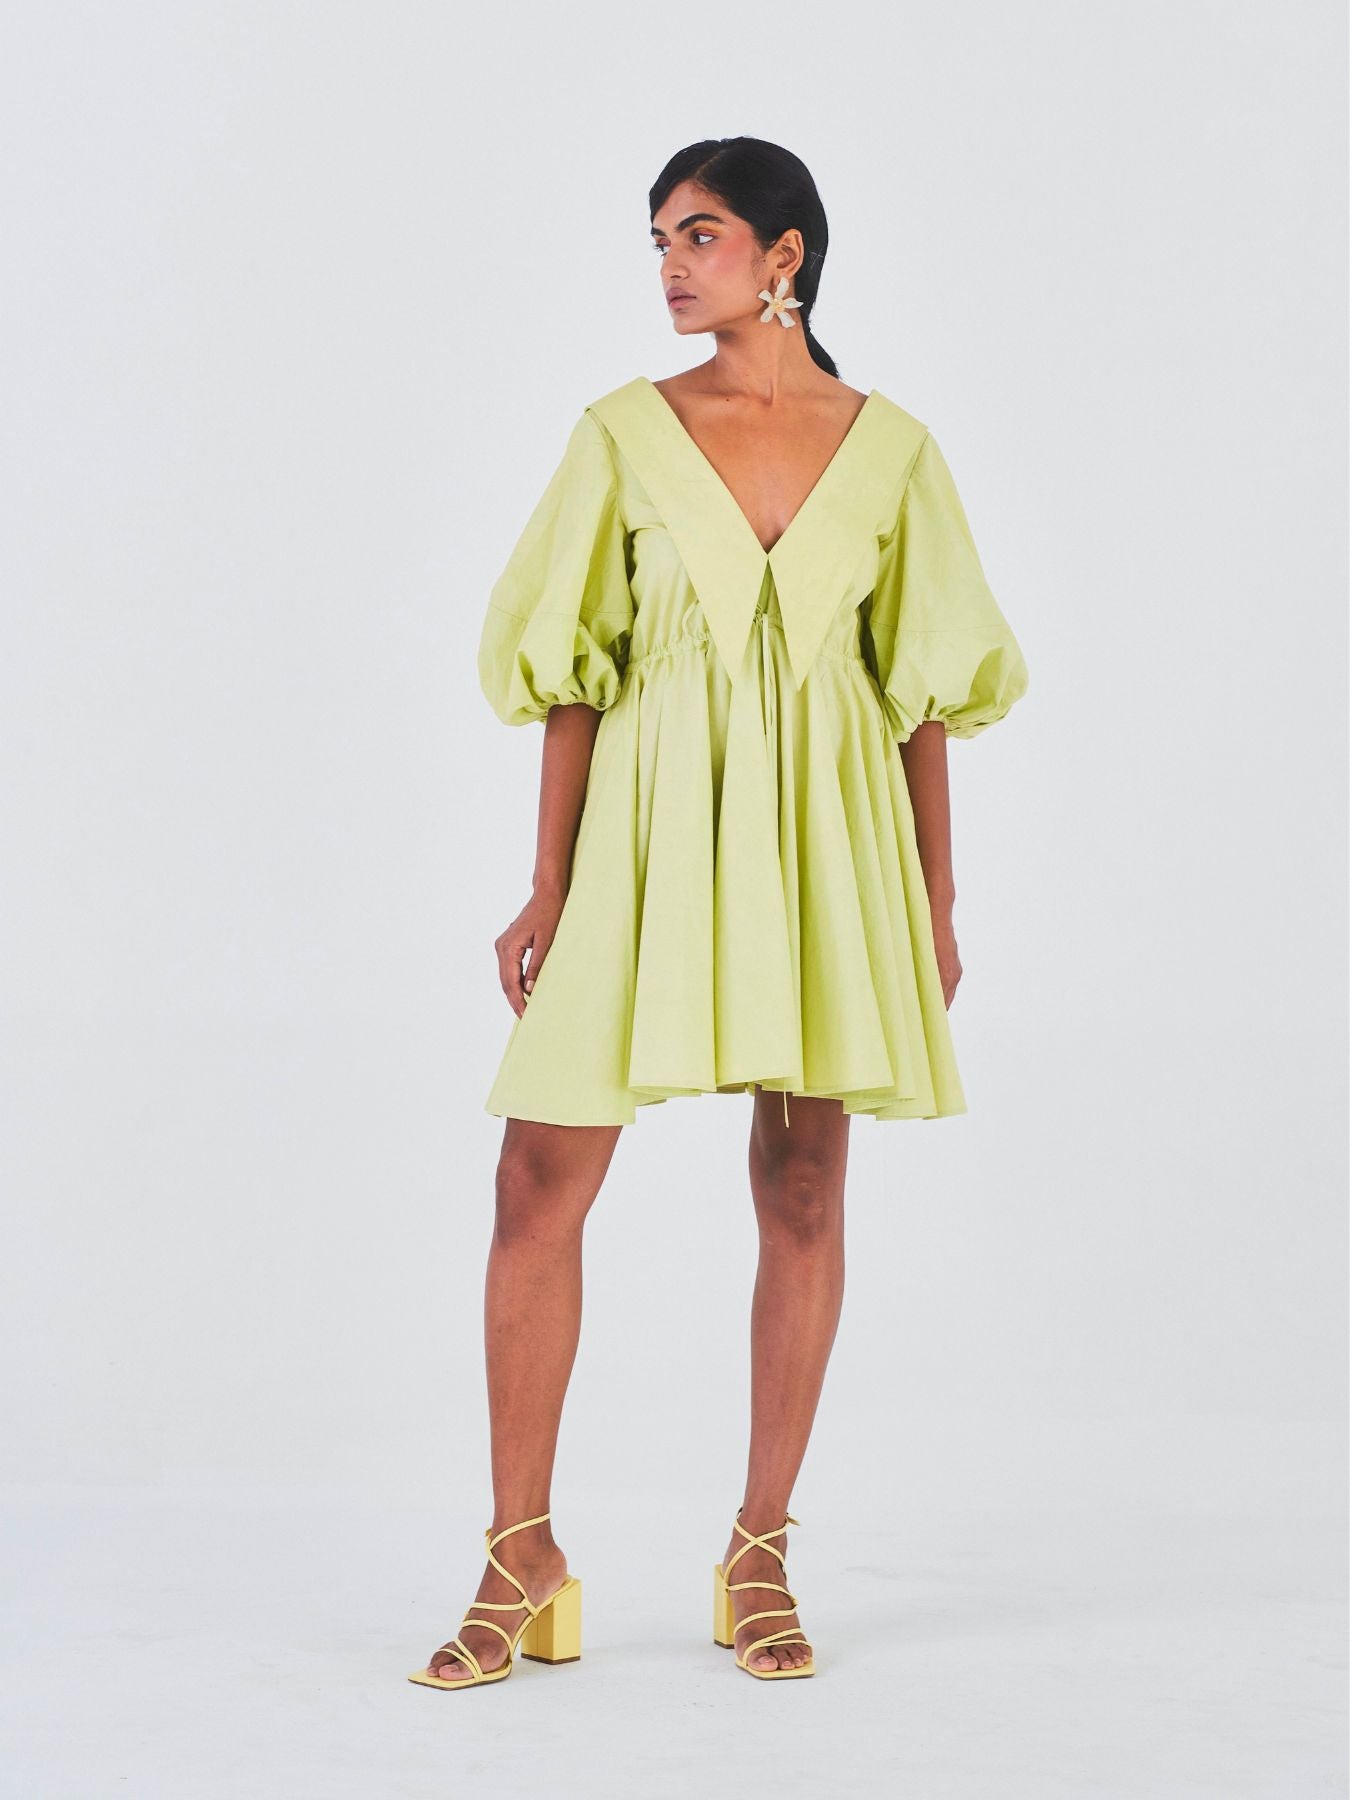 Relevé Fashion  Little Things Studio Sada Bahar Dress, Lime Green